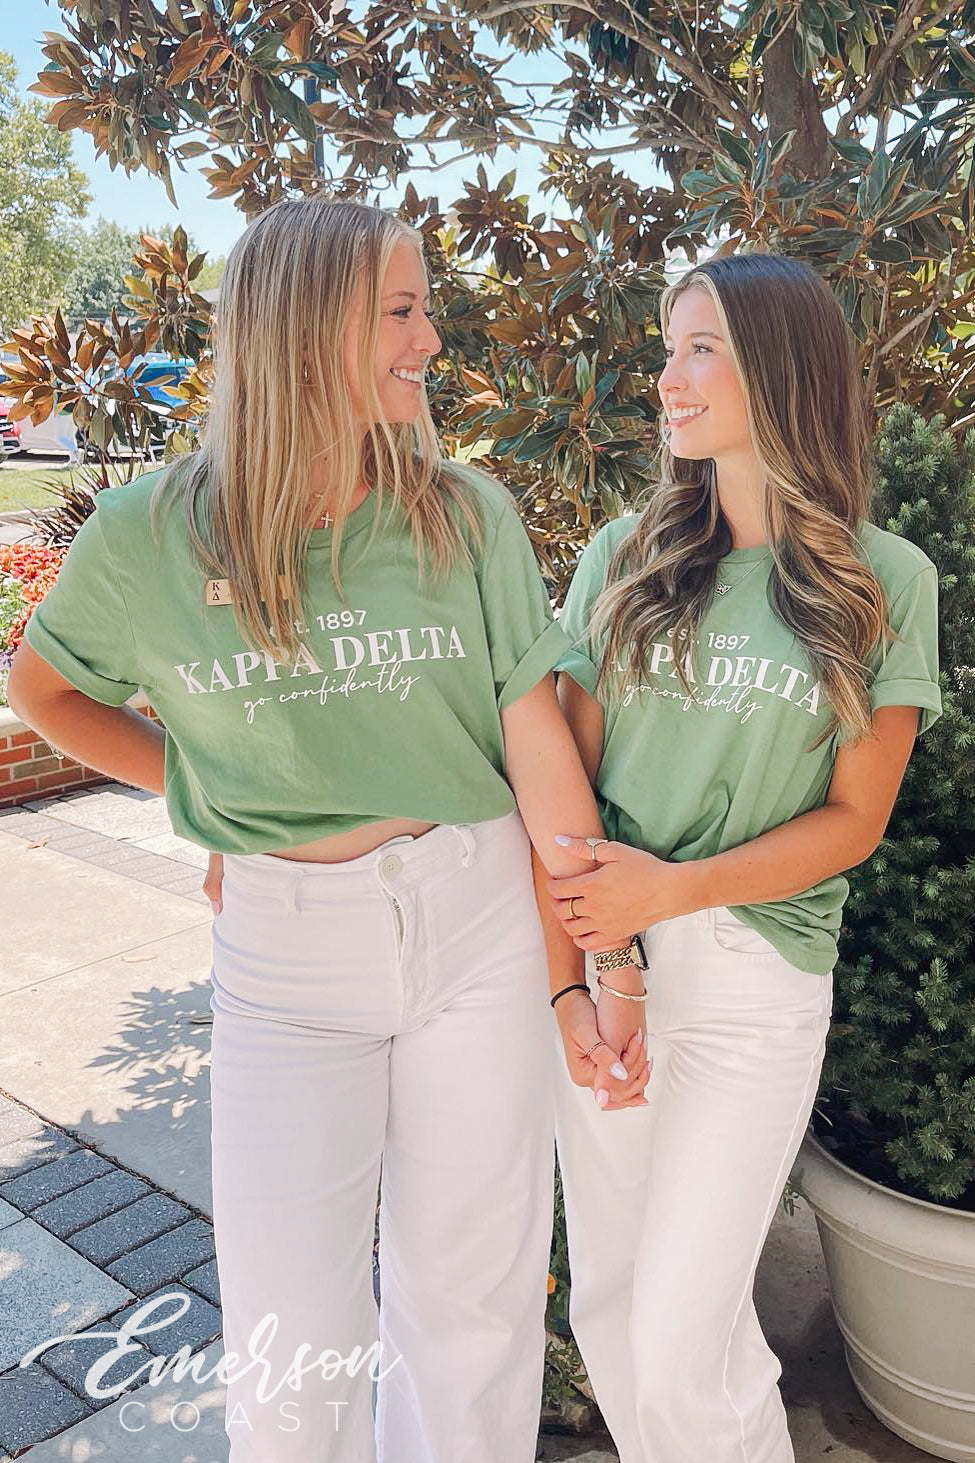 Kappa Delta Simple Green Recruitment T-shirt